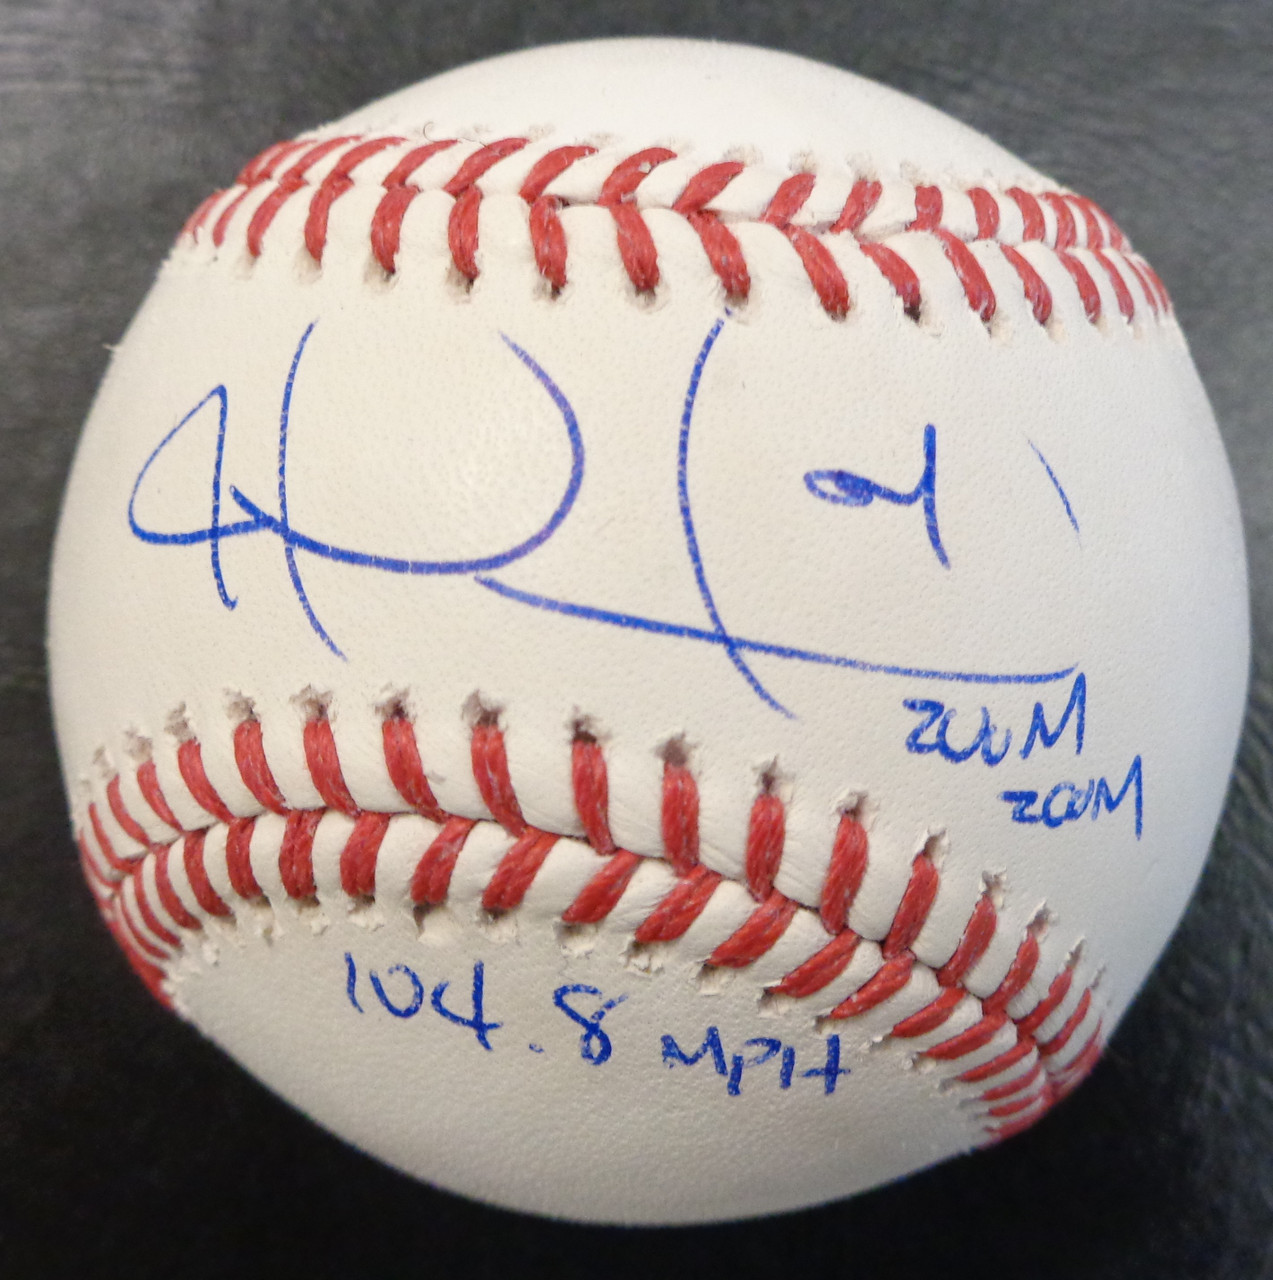 Joel Zumaya Autographed Official Major League Baseball w/ Zoom Zoom &  104.8 MPH - Detroit City Sports